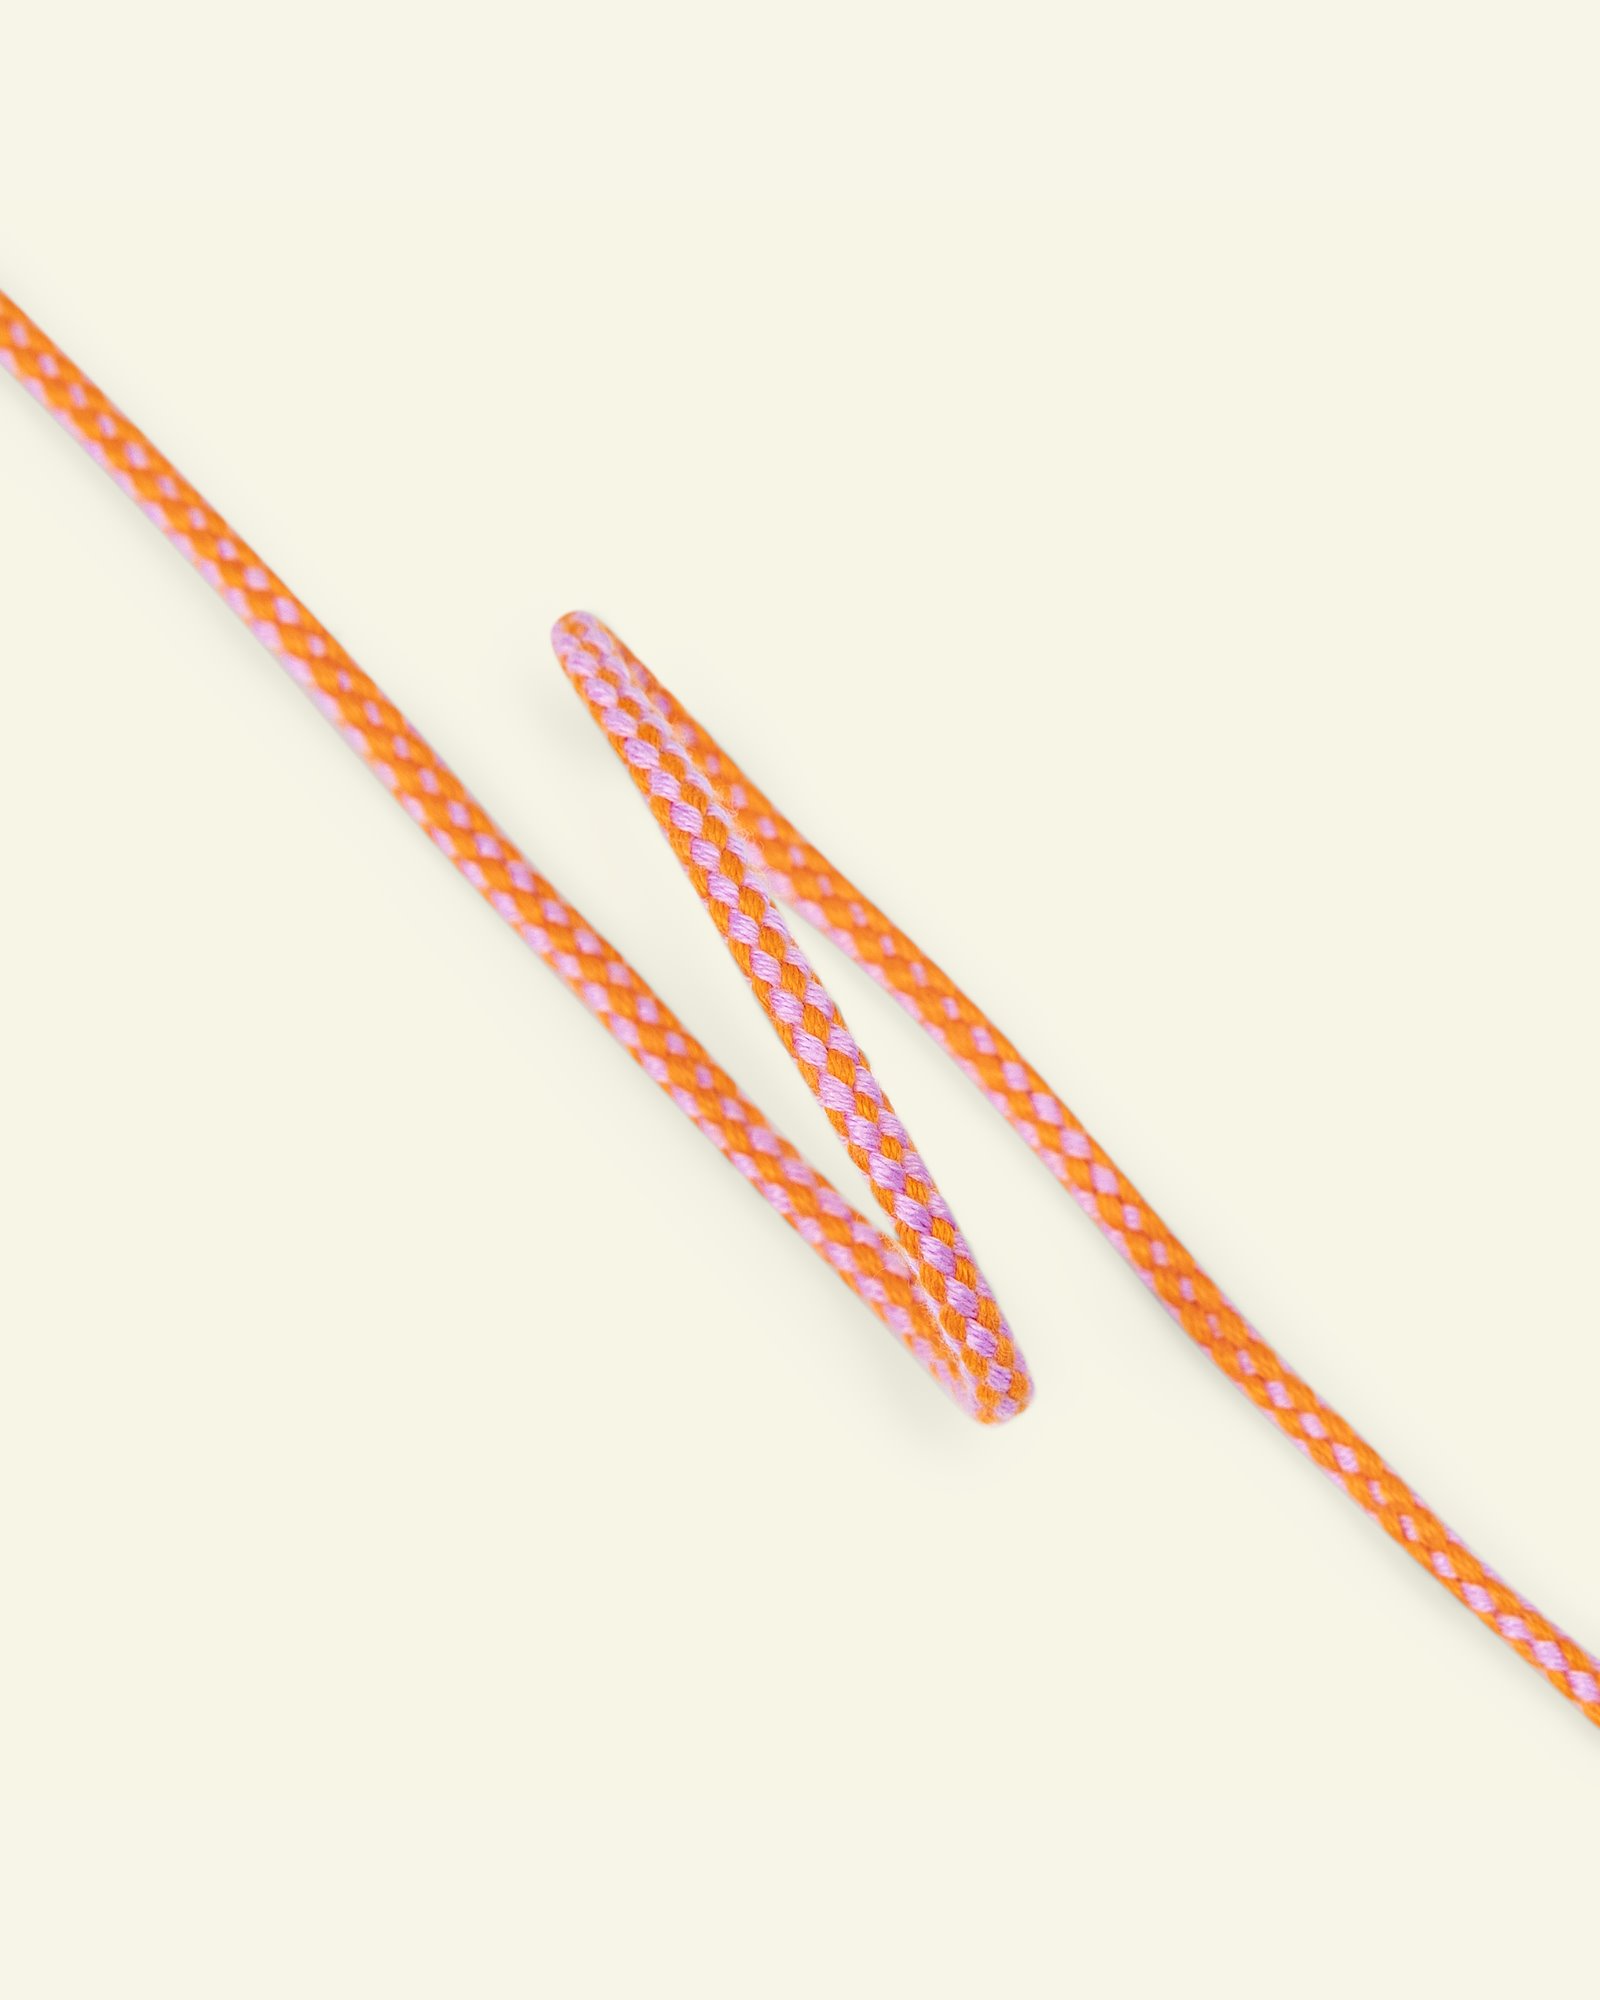 Anorak cord 3,5mm pink/orange 100m 75104_pack